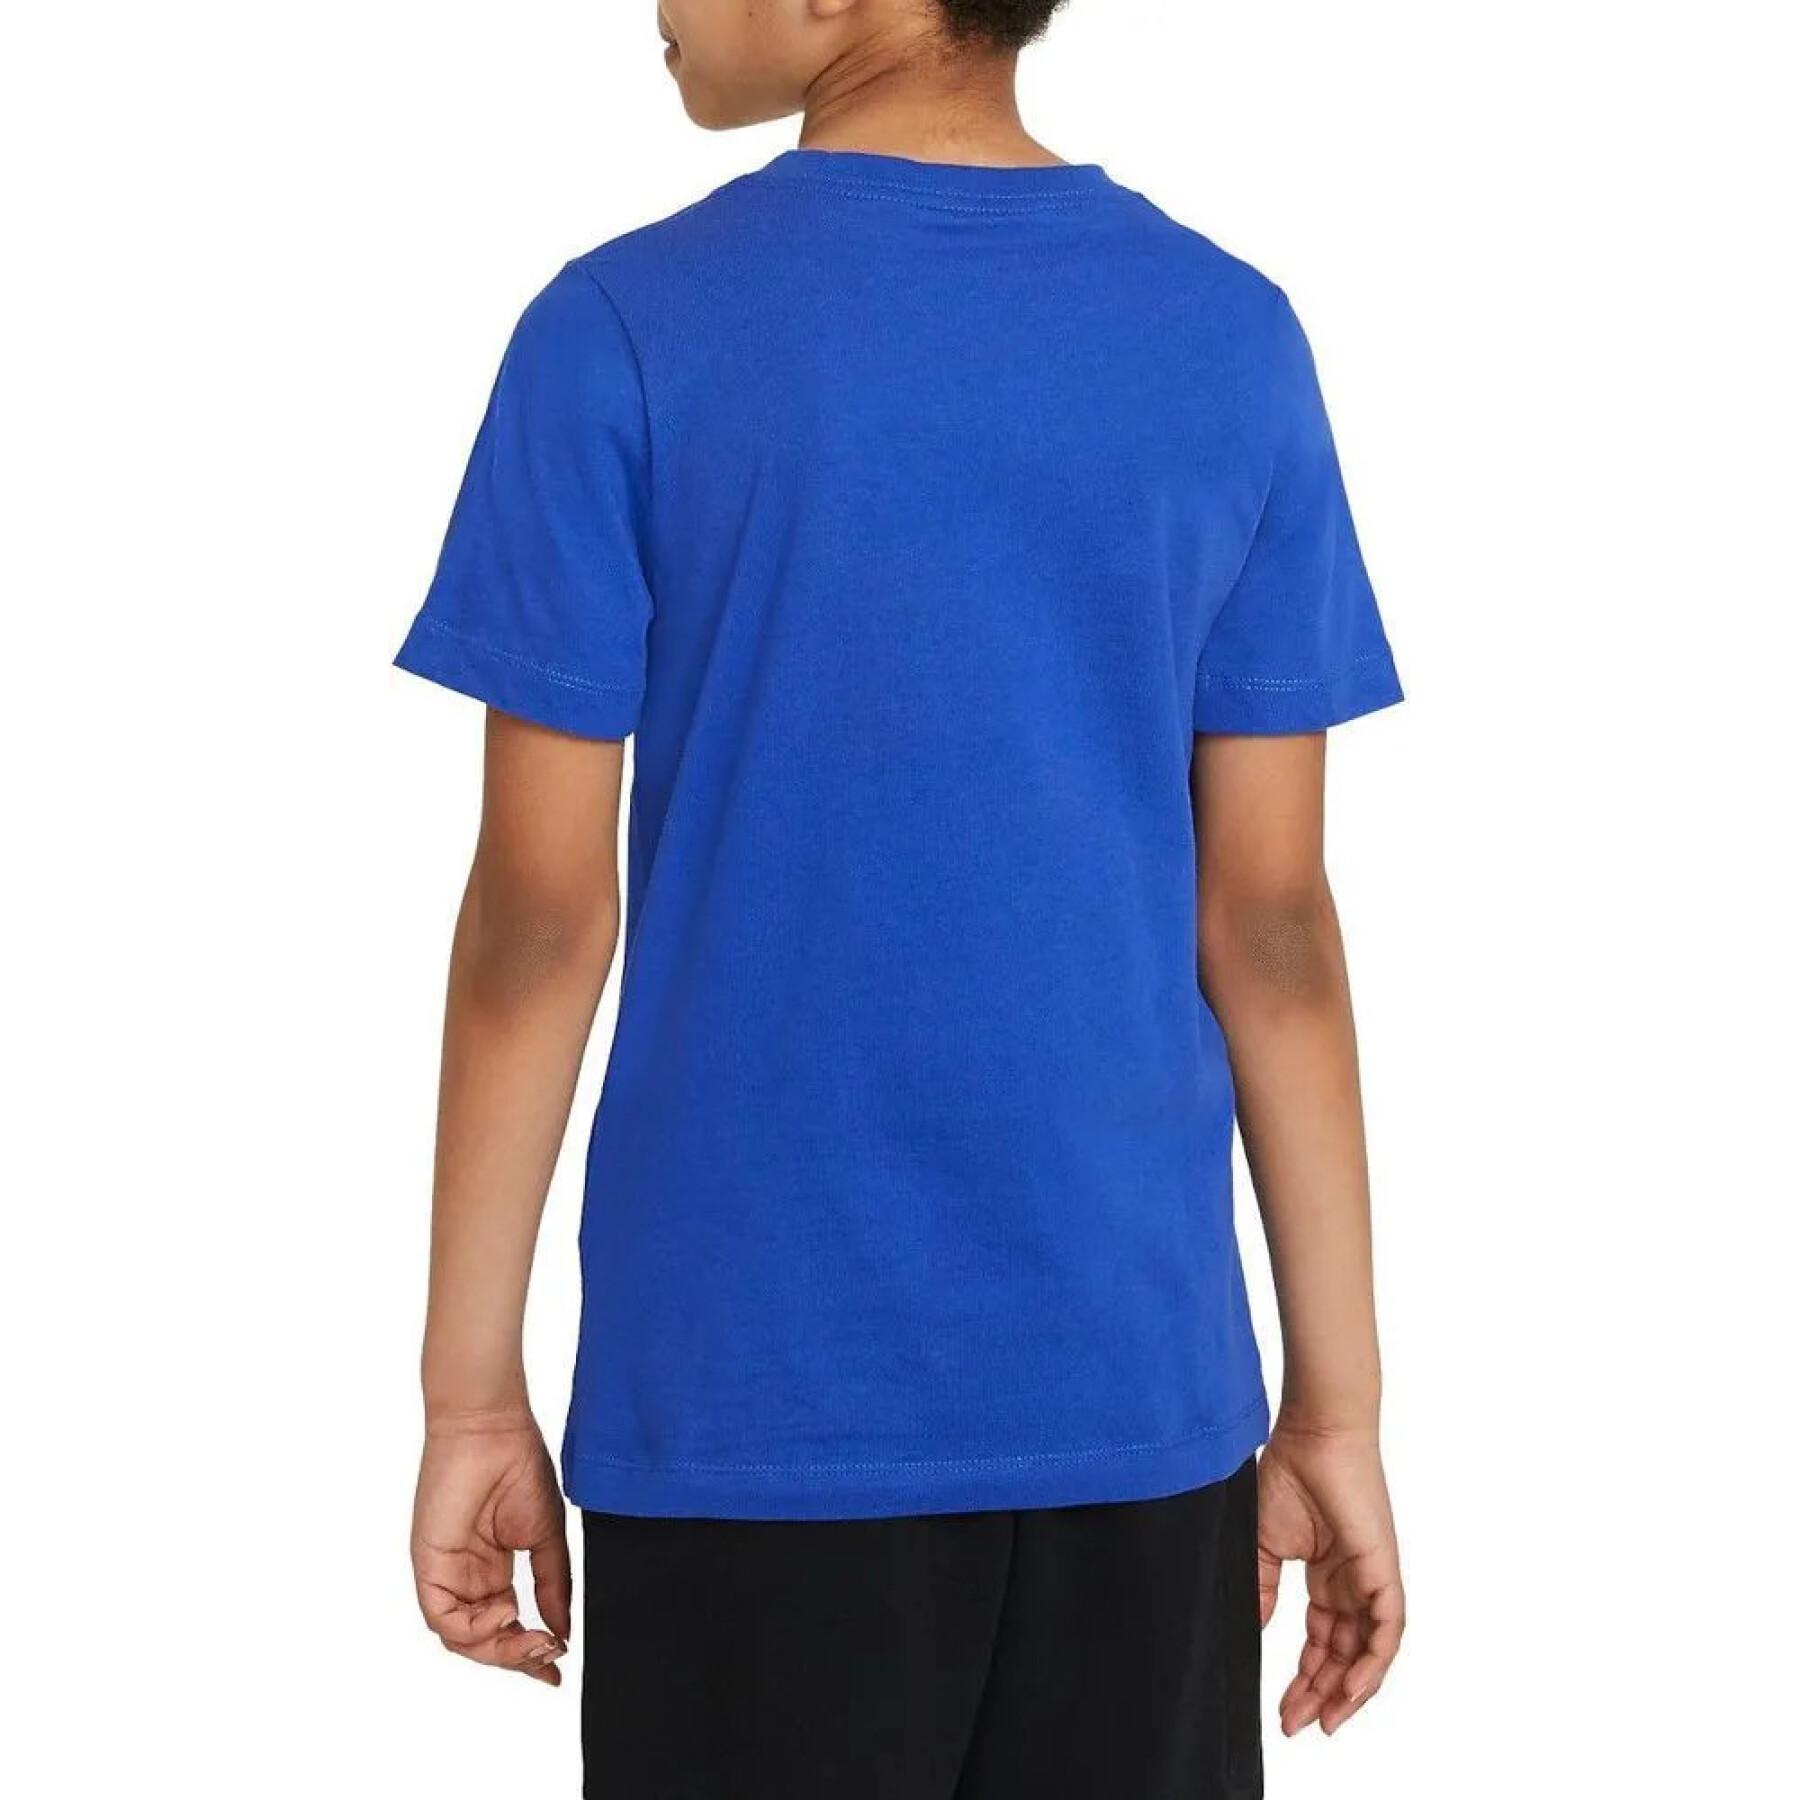 Kinder-T-shirt Chelsea SWOOSH CLUB 2021/22